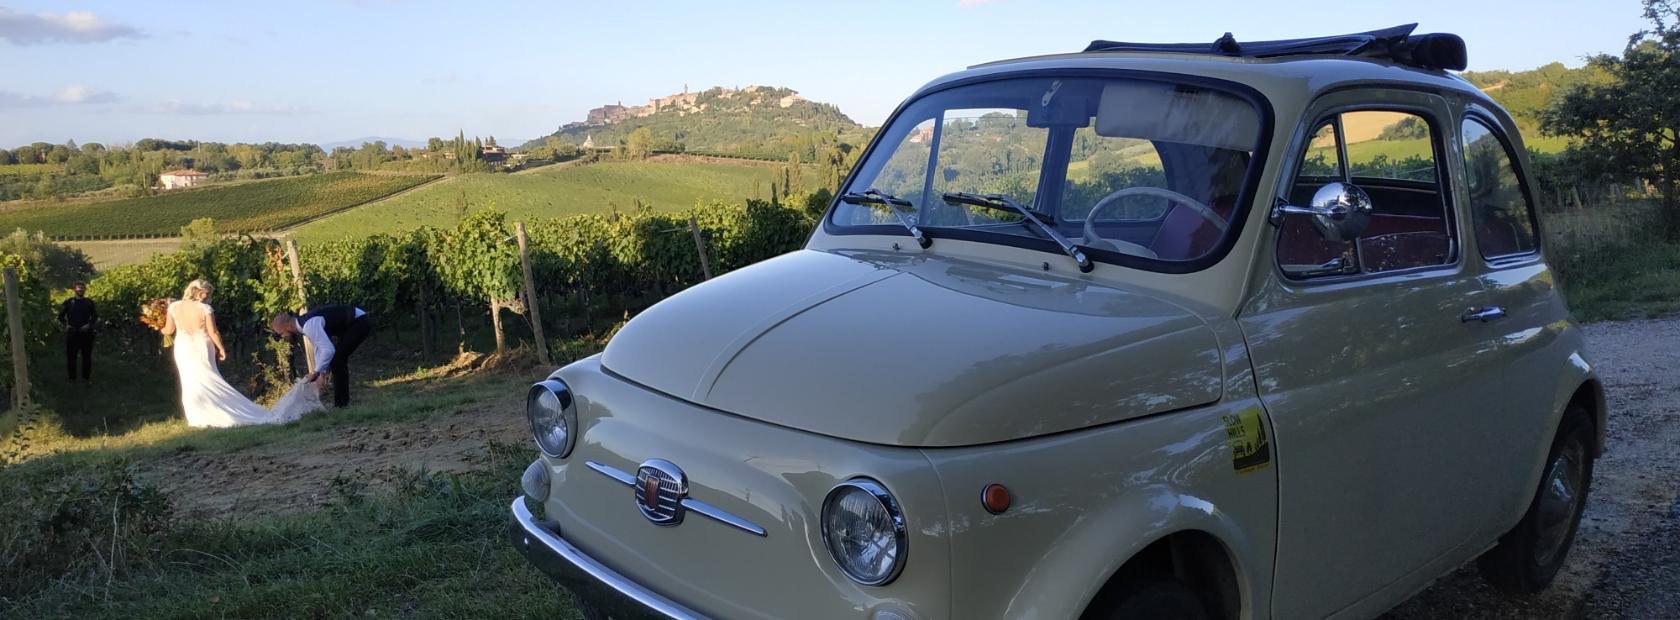 Noleggio Fiat 500 d'epoca per matrimoni e tour a Siena e in Valdorcia